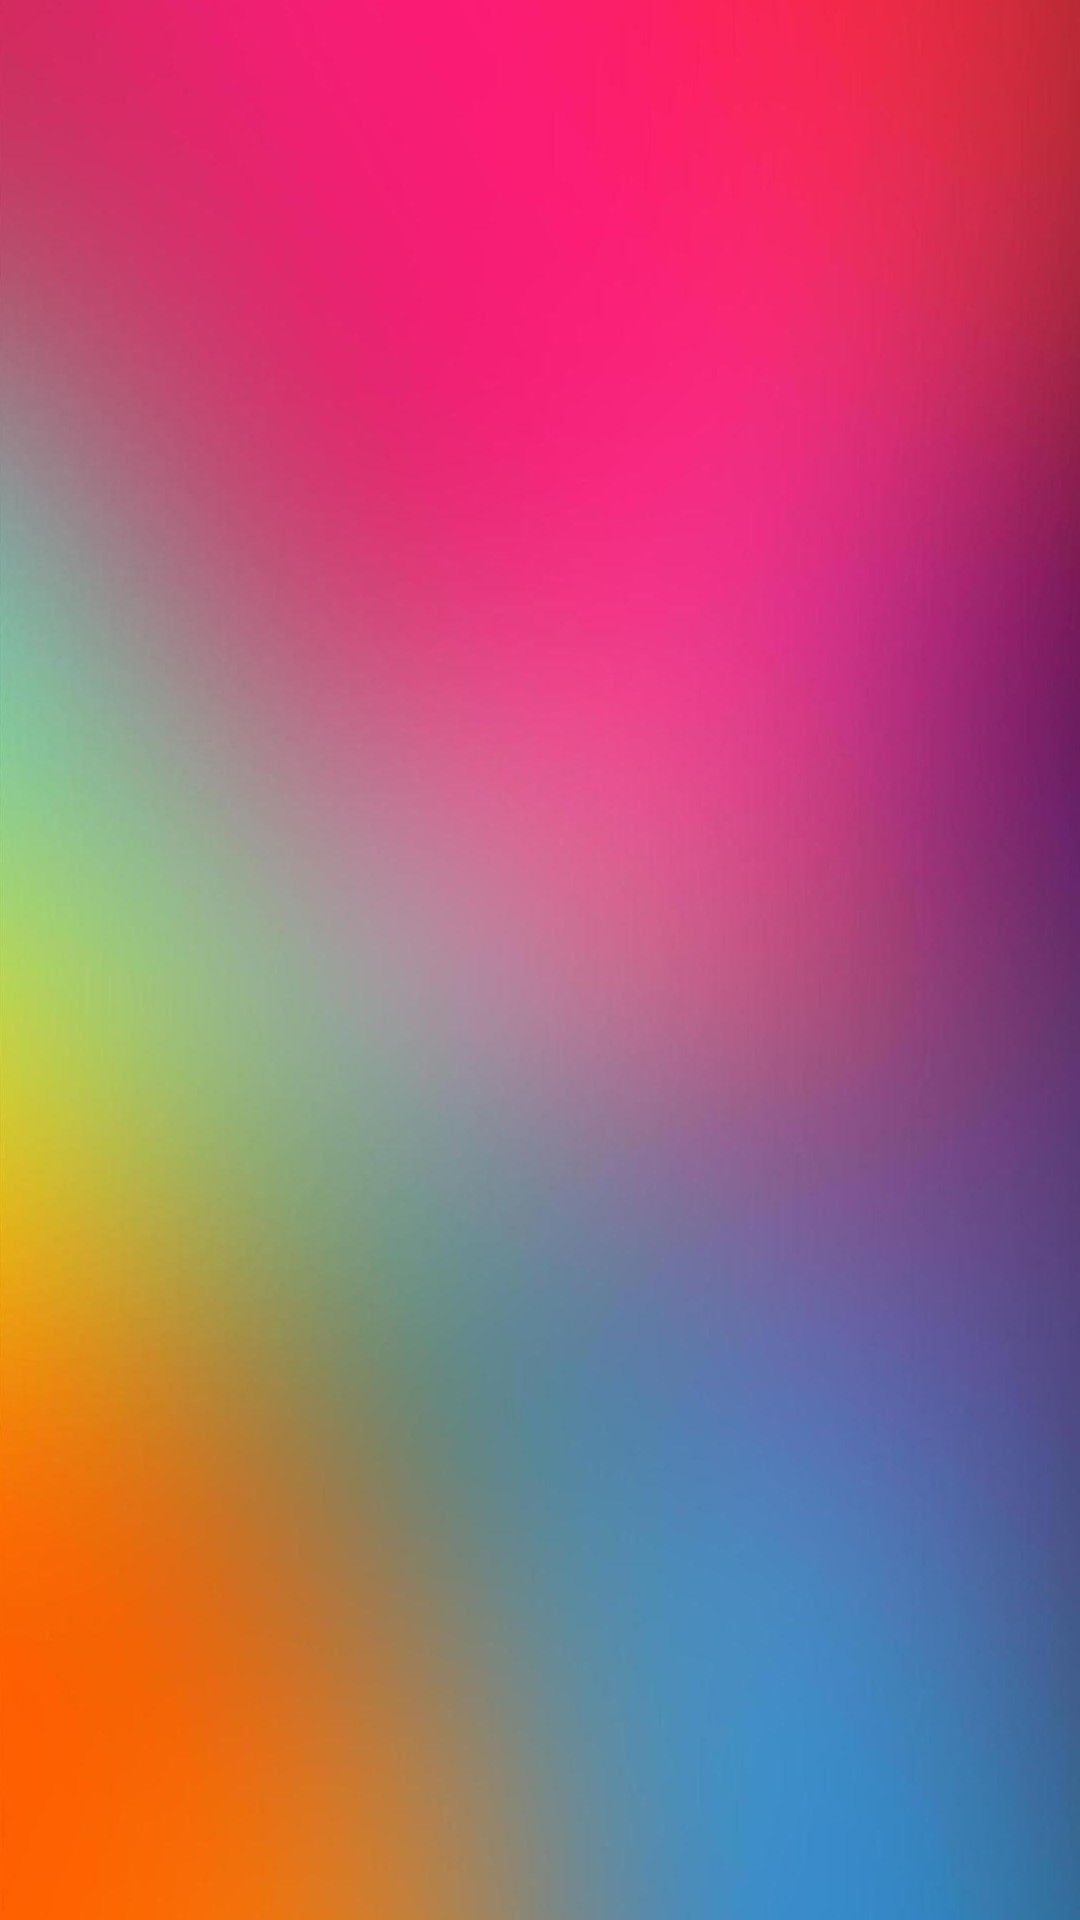 A Nexus 5 Nexus Wallpaper Hd 1080x19 Wallpaper Teahub Io